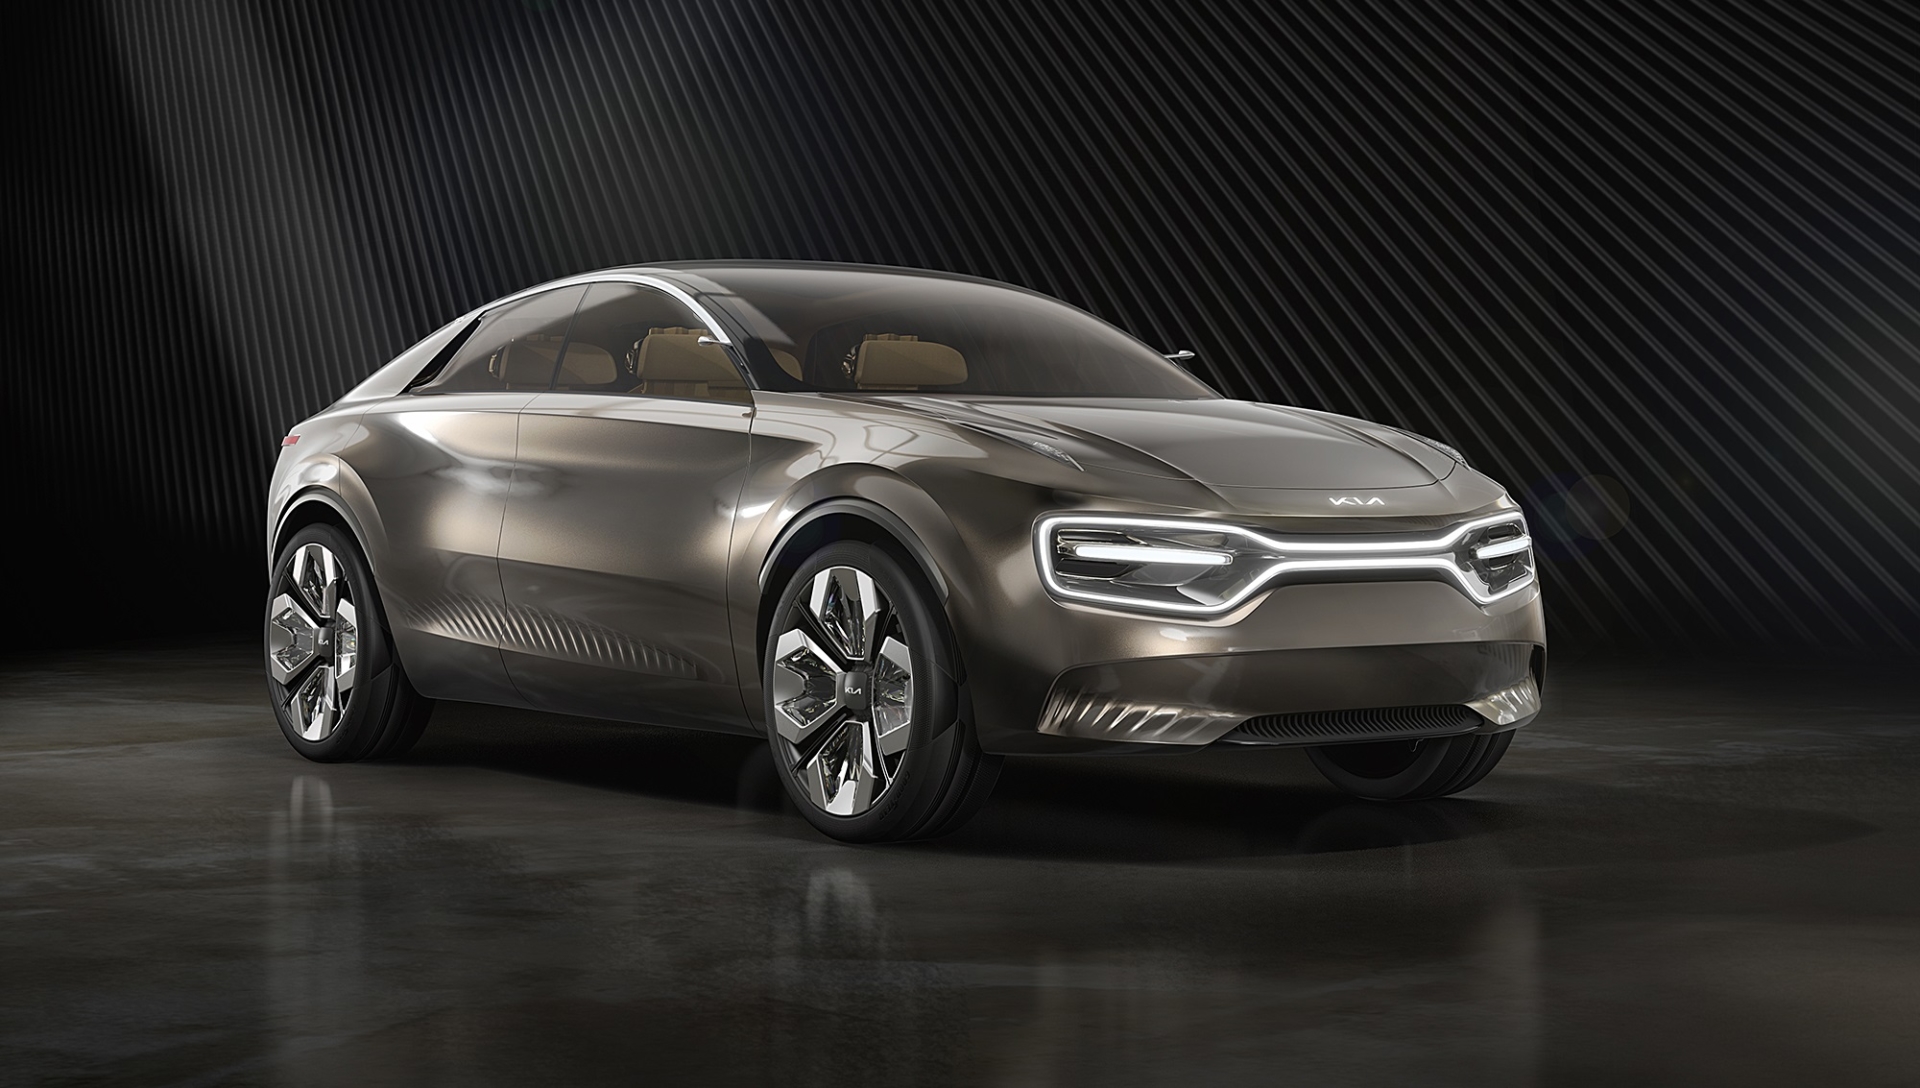 Le concept-car Imagine de Kia sera proposé au grand public en 2021. © Kia Imagine by Kia concept 2019